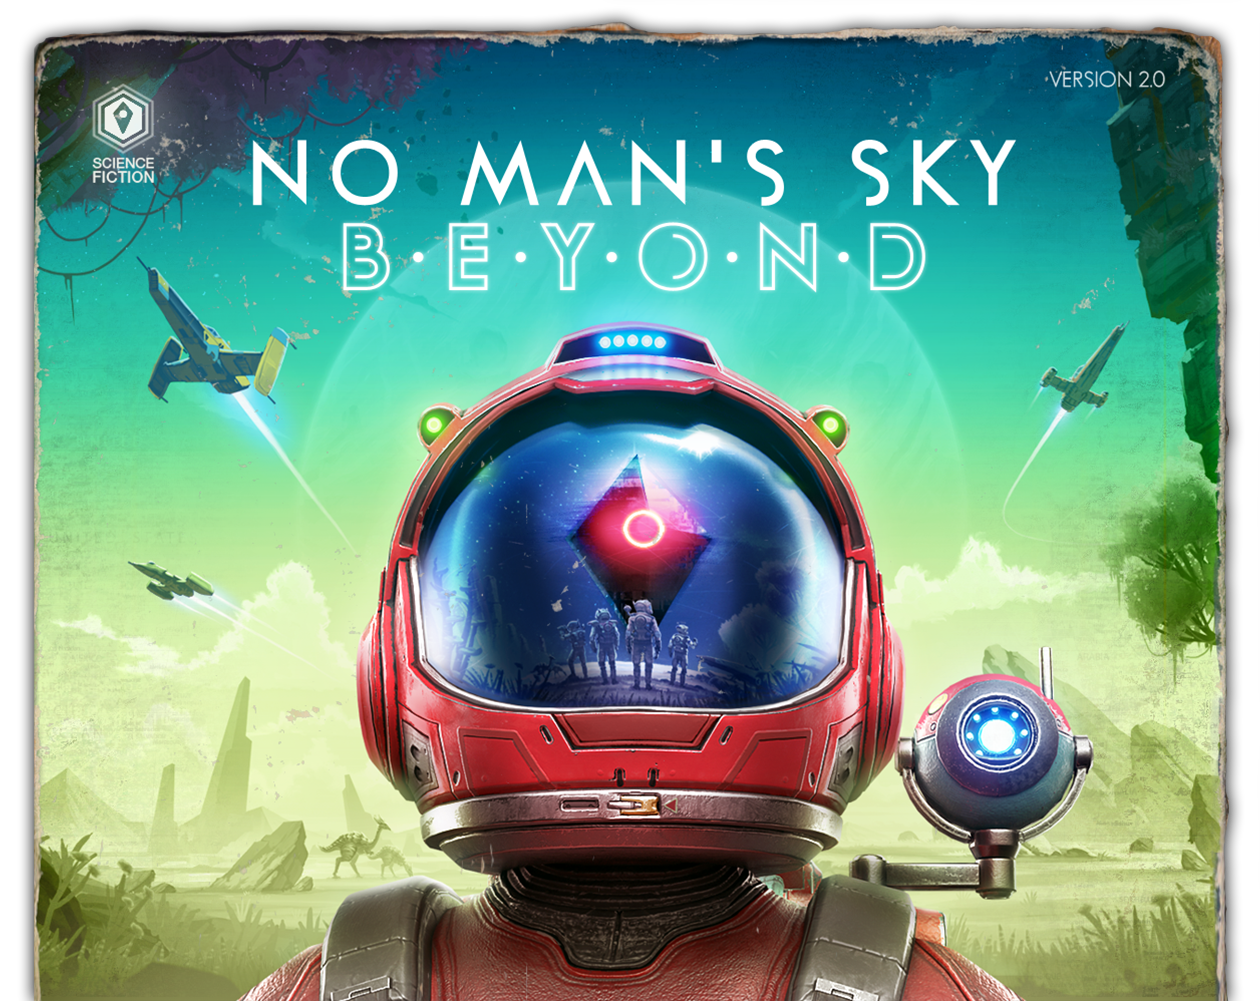 Book cover styled art showcasing No Man's Sky artwork